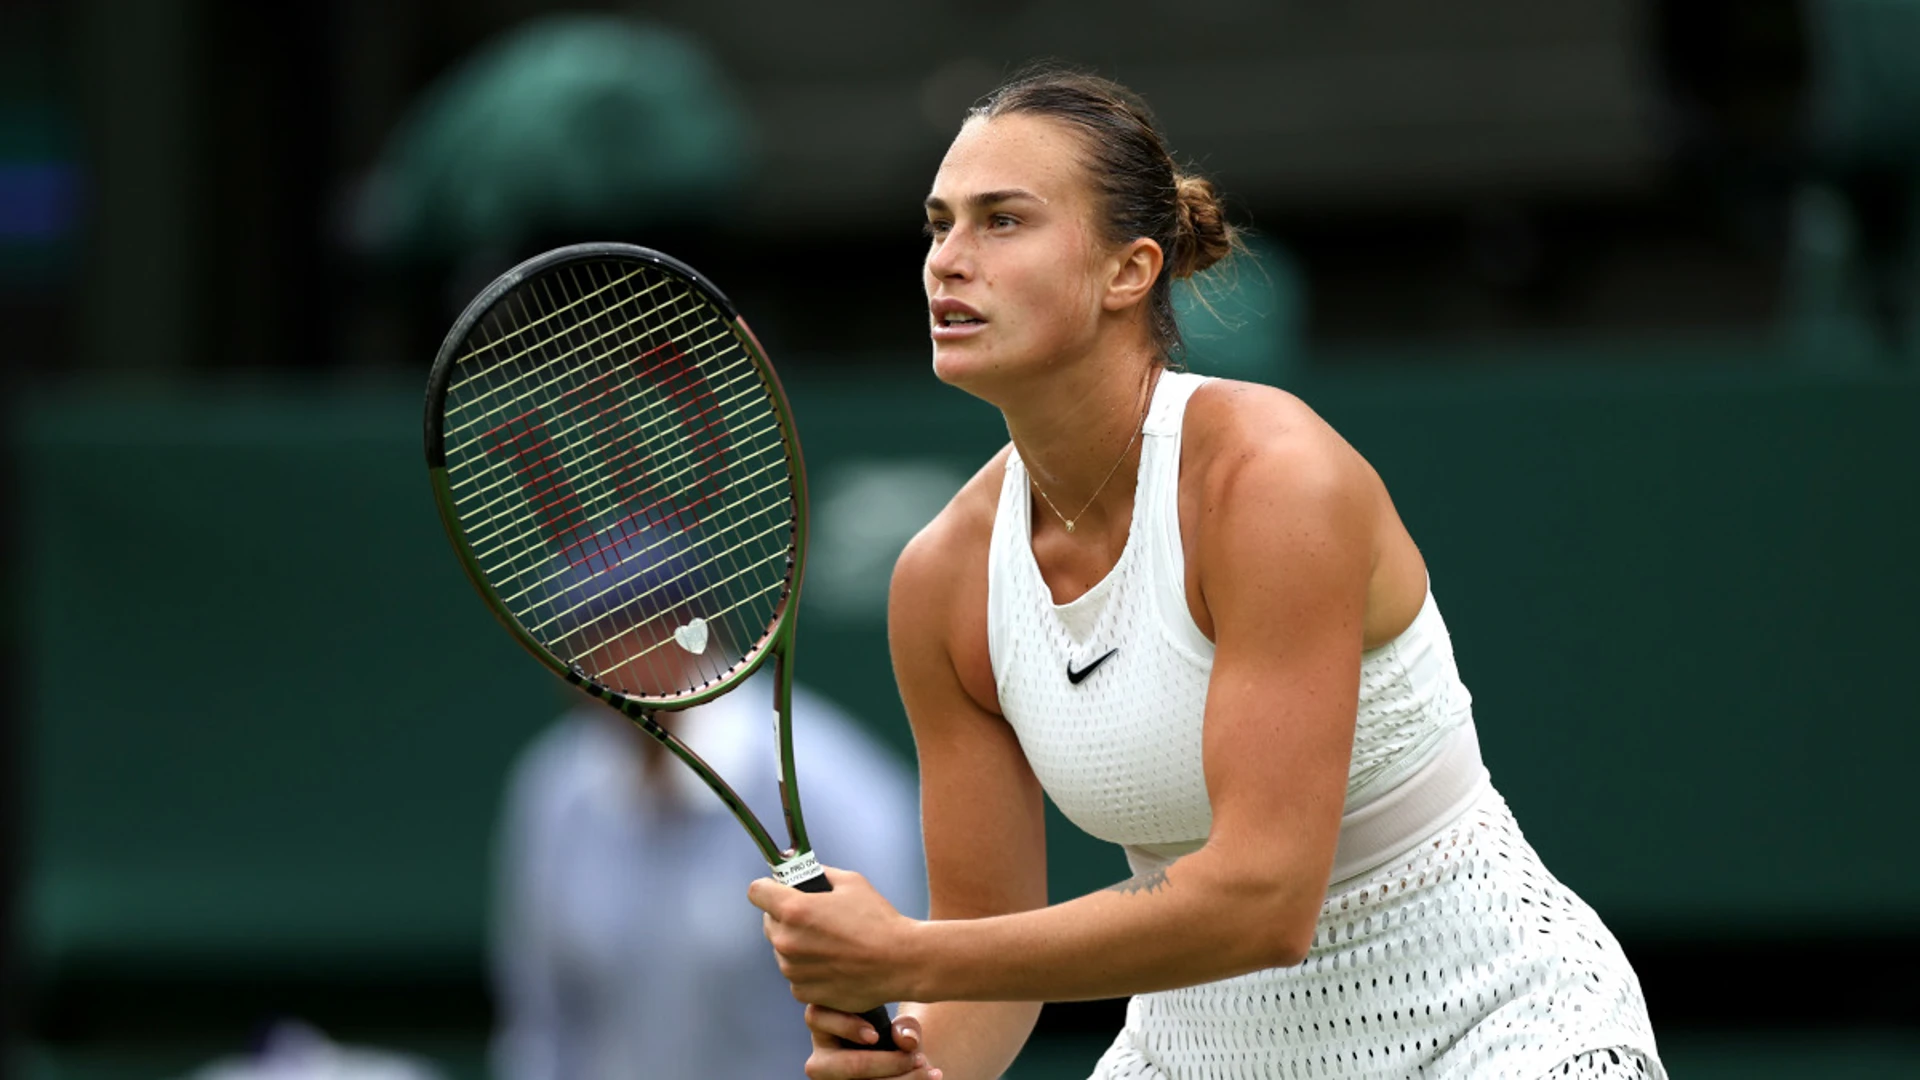 Former champions Rybakina, Vondrousova eye Wimbledon repeats but injuries a concern